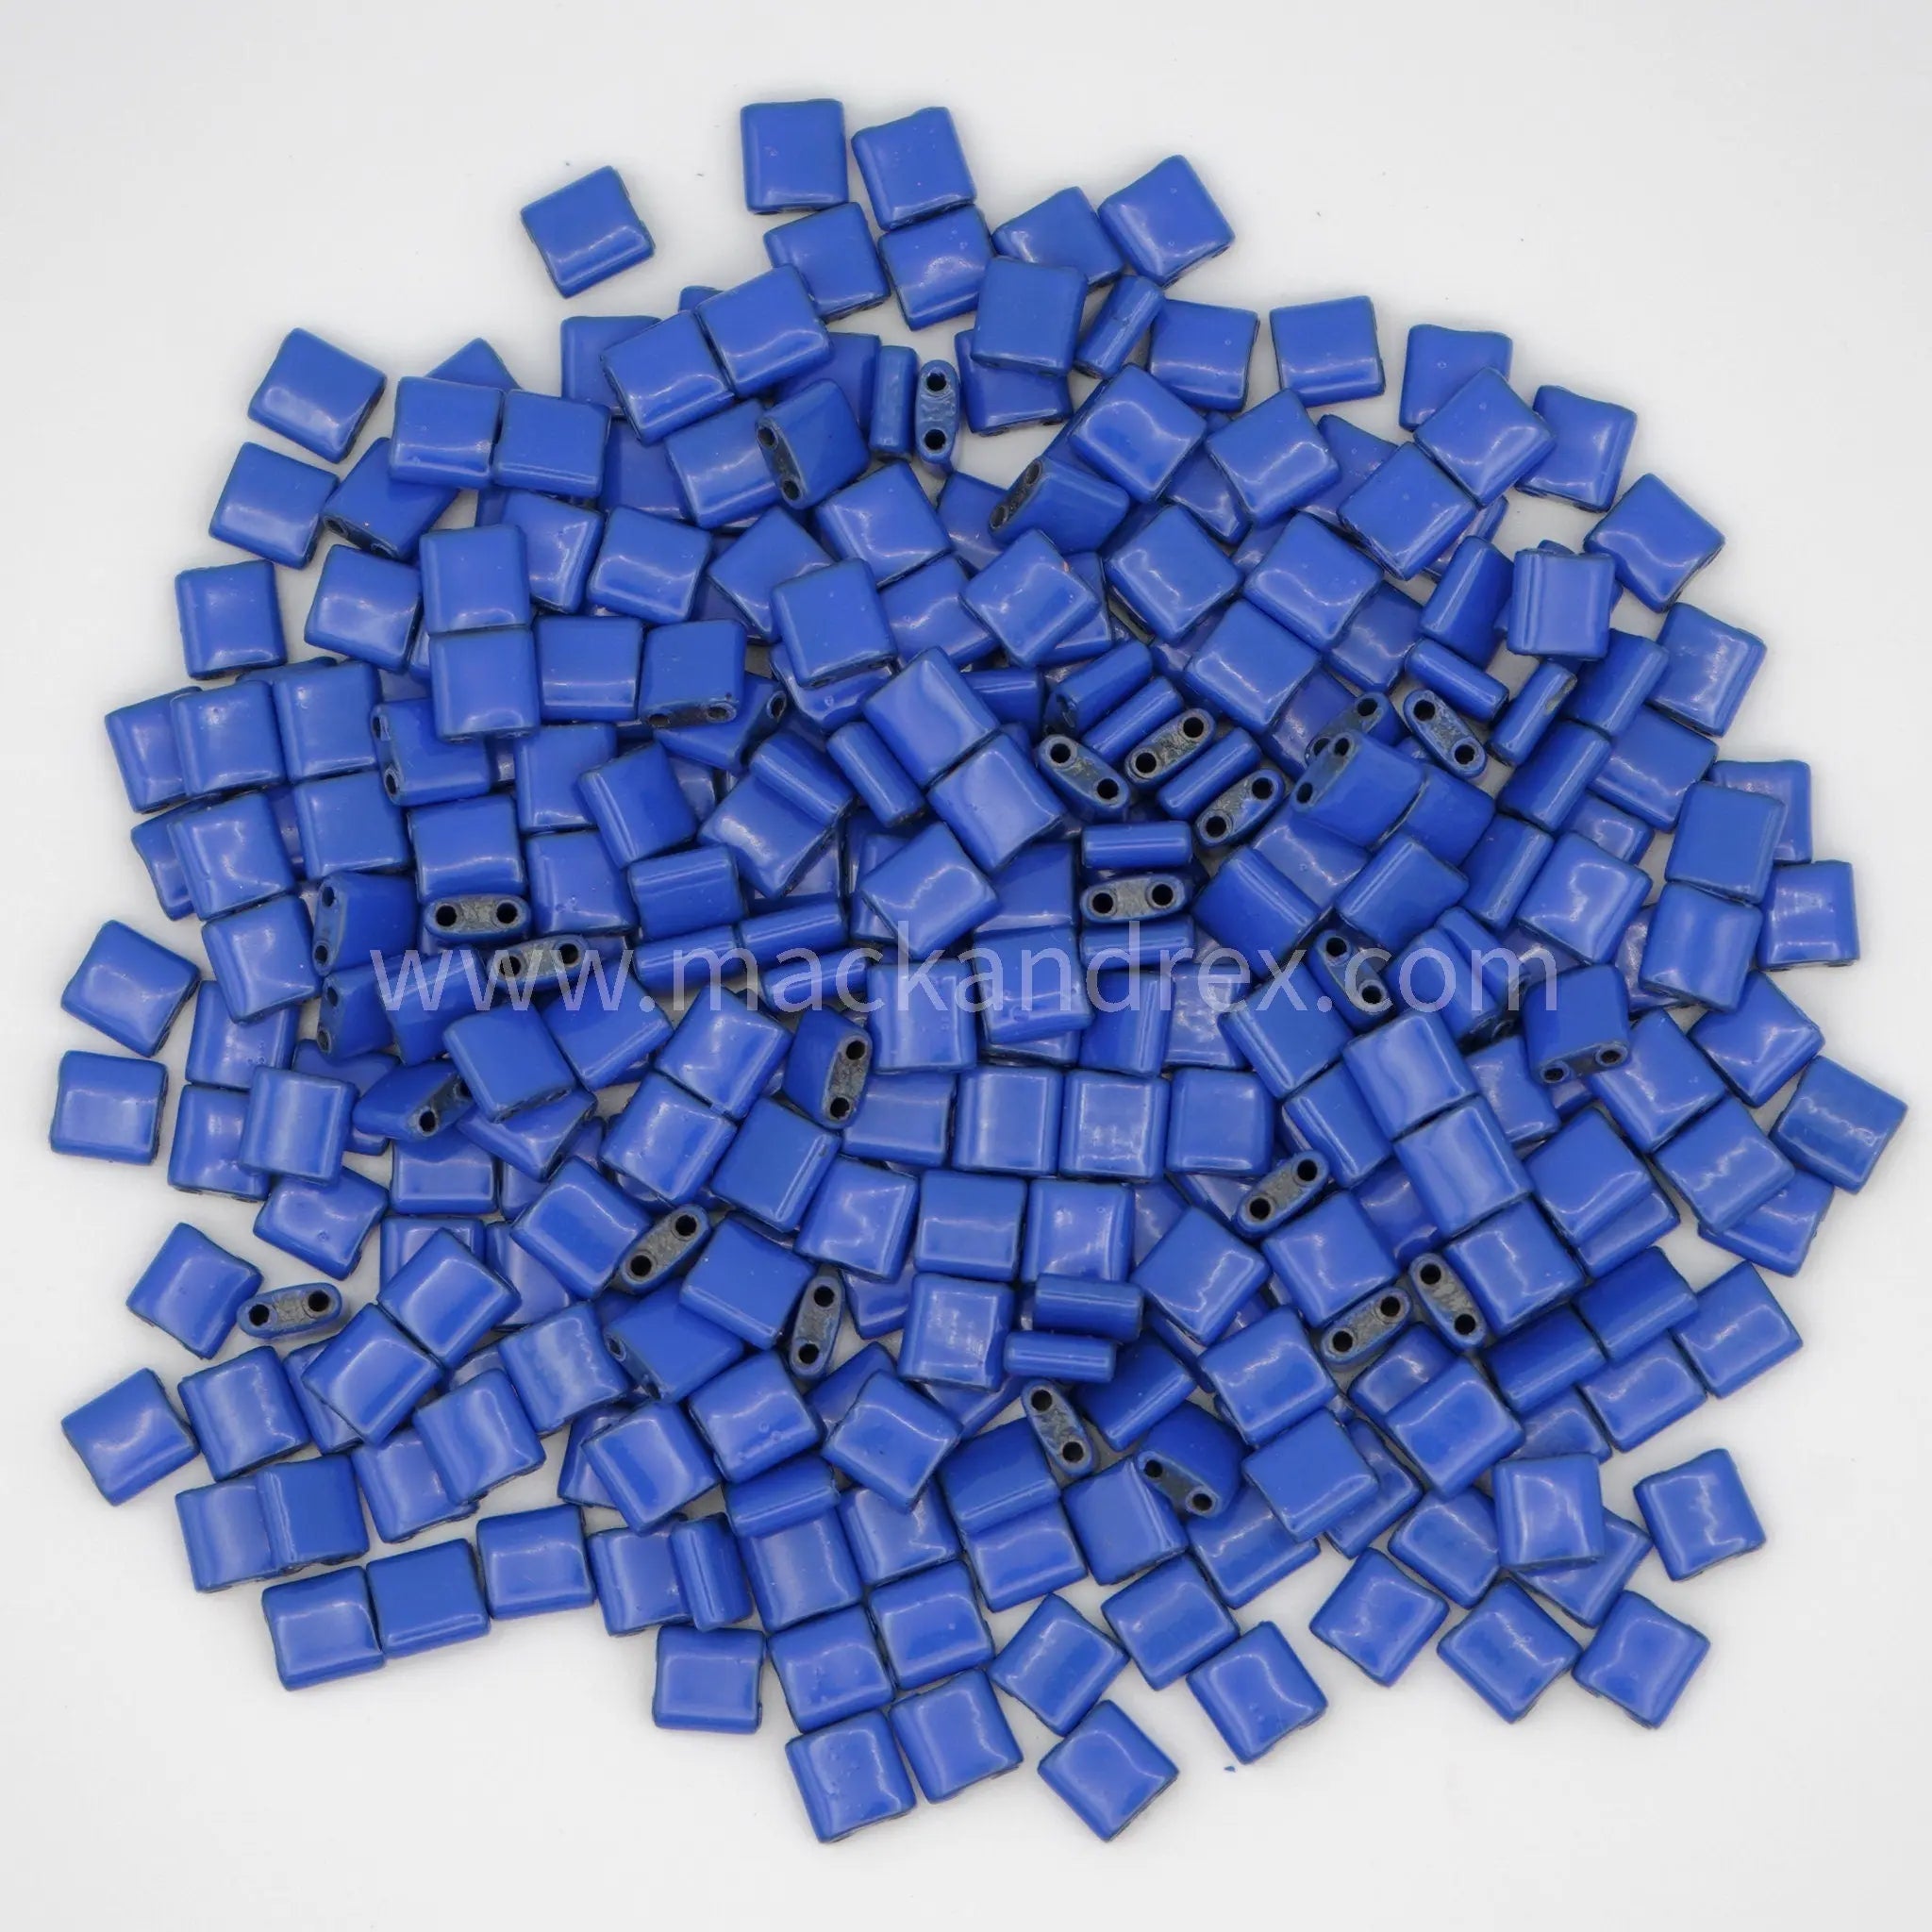 Royal Blue - Tile Beads Specialty Color TL6005 - Mack & Rex